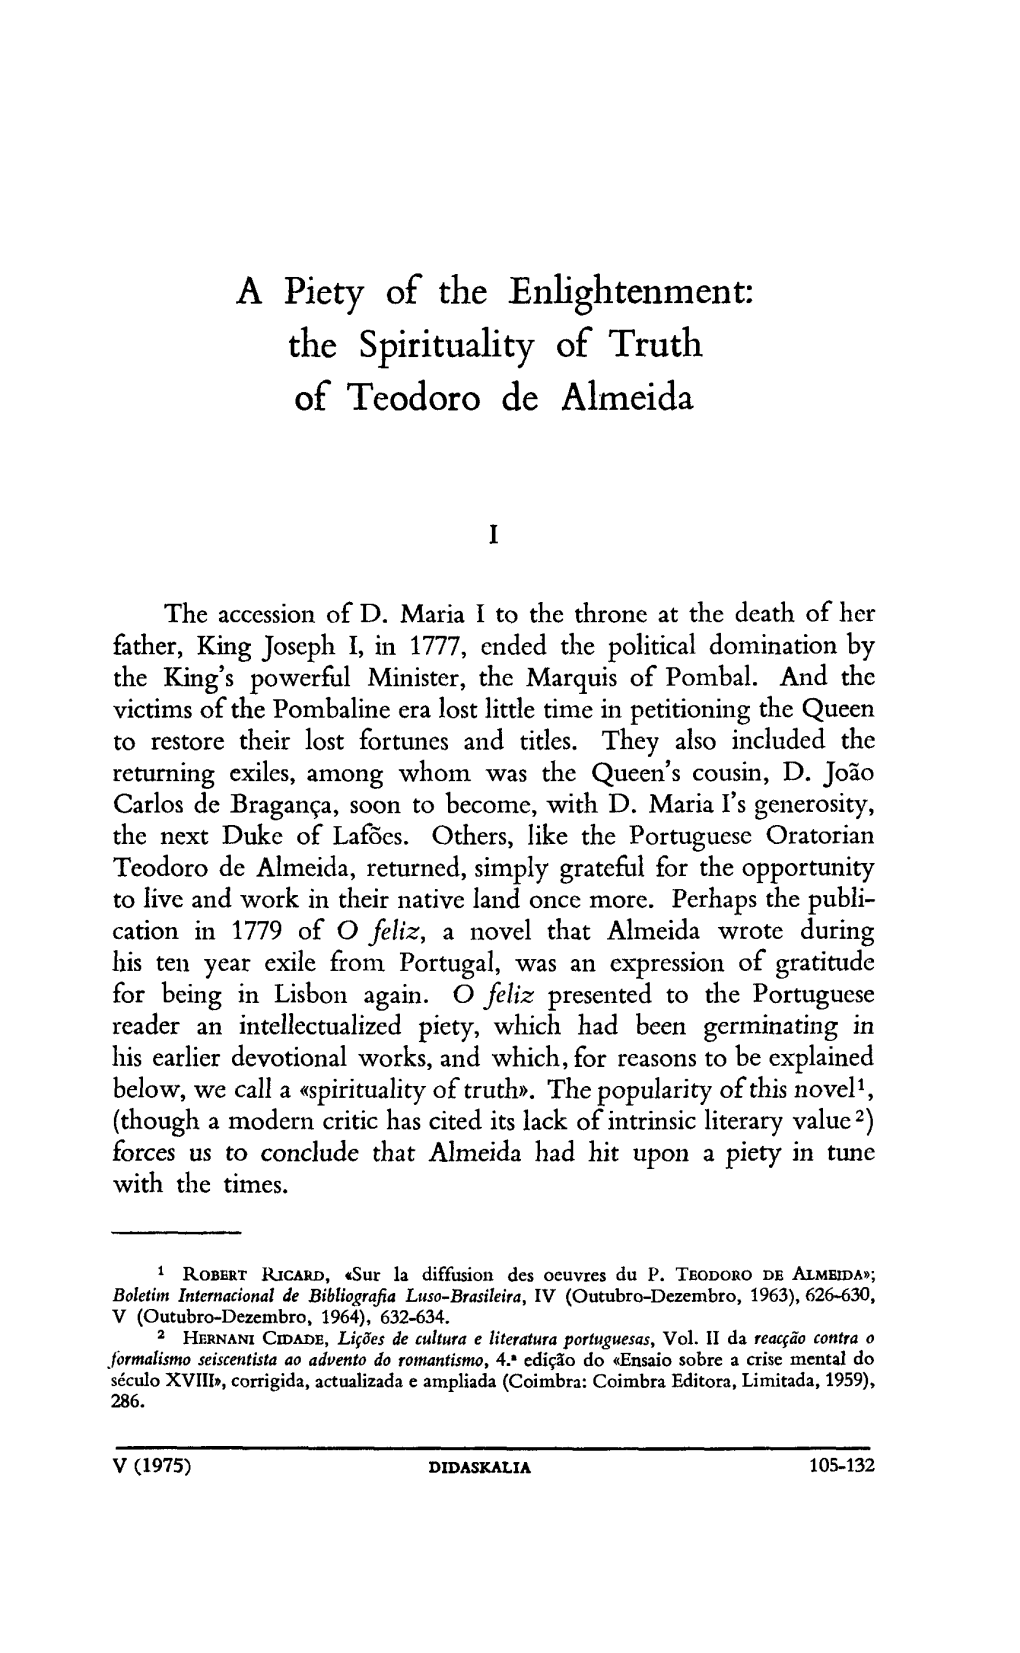 The Spirituality of Truth of Teodoro De Almeida